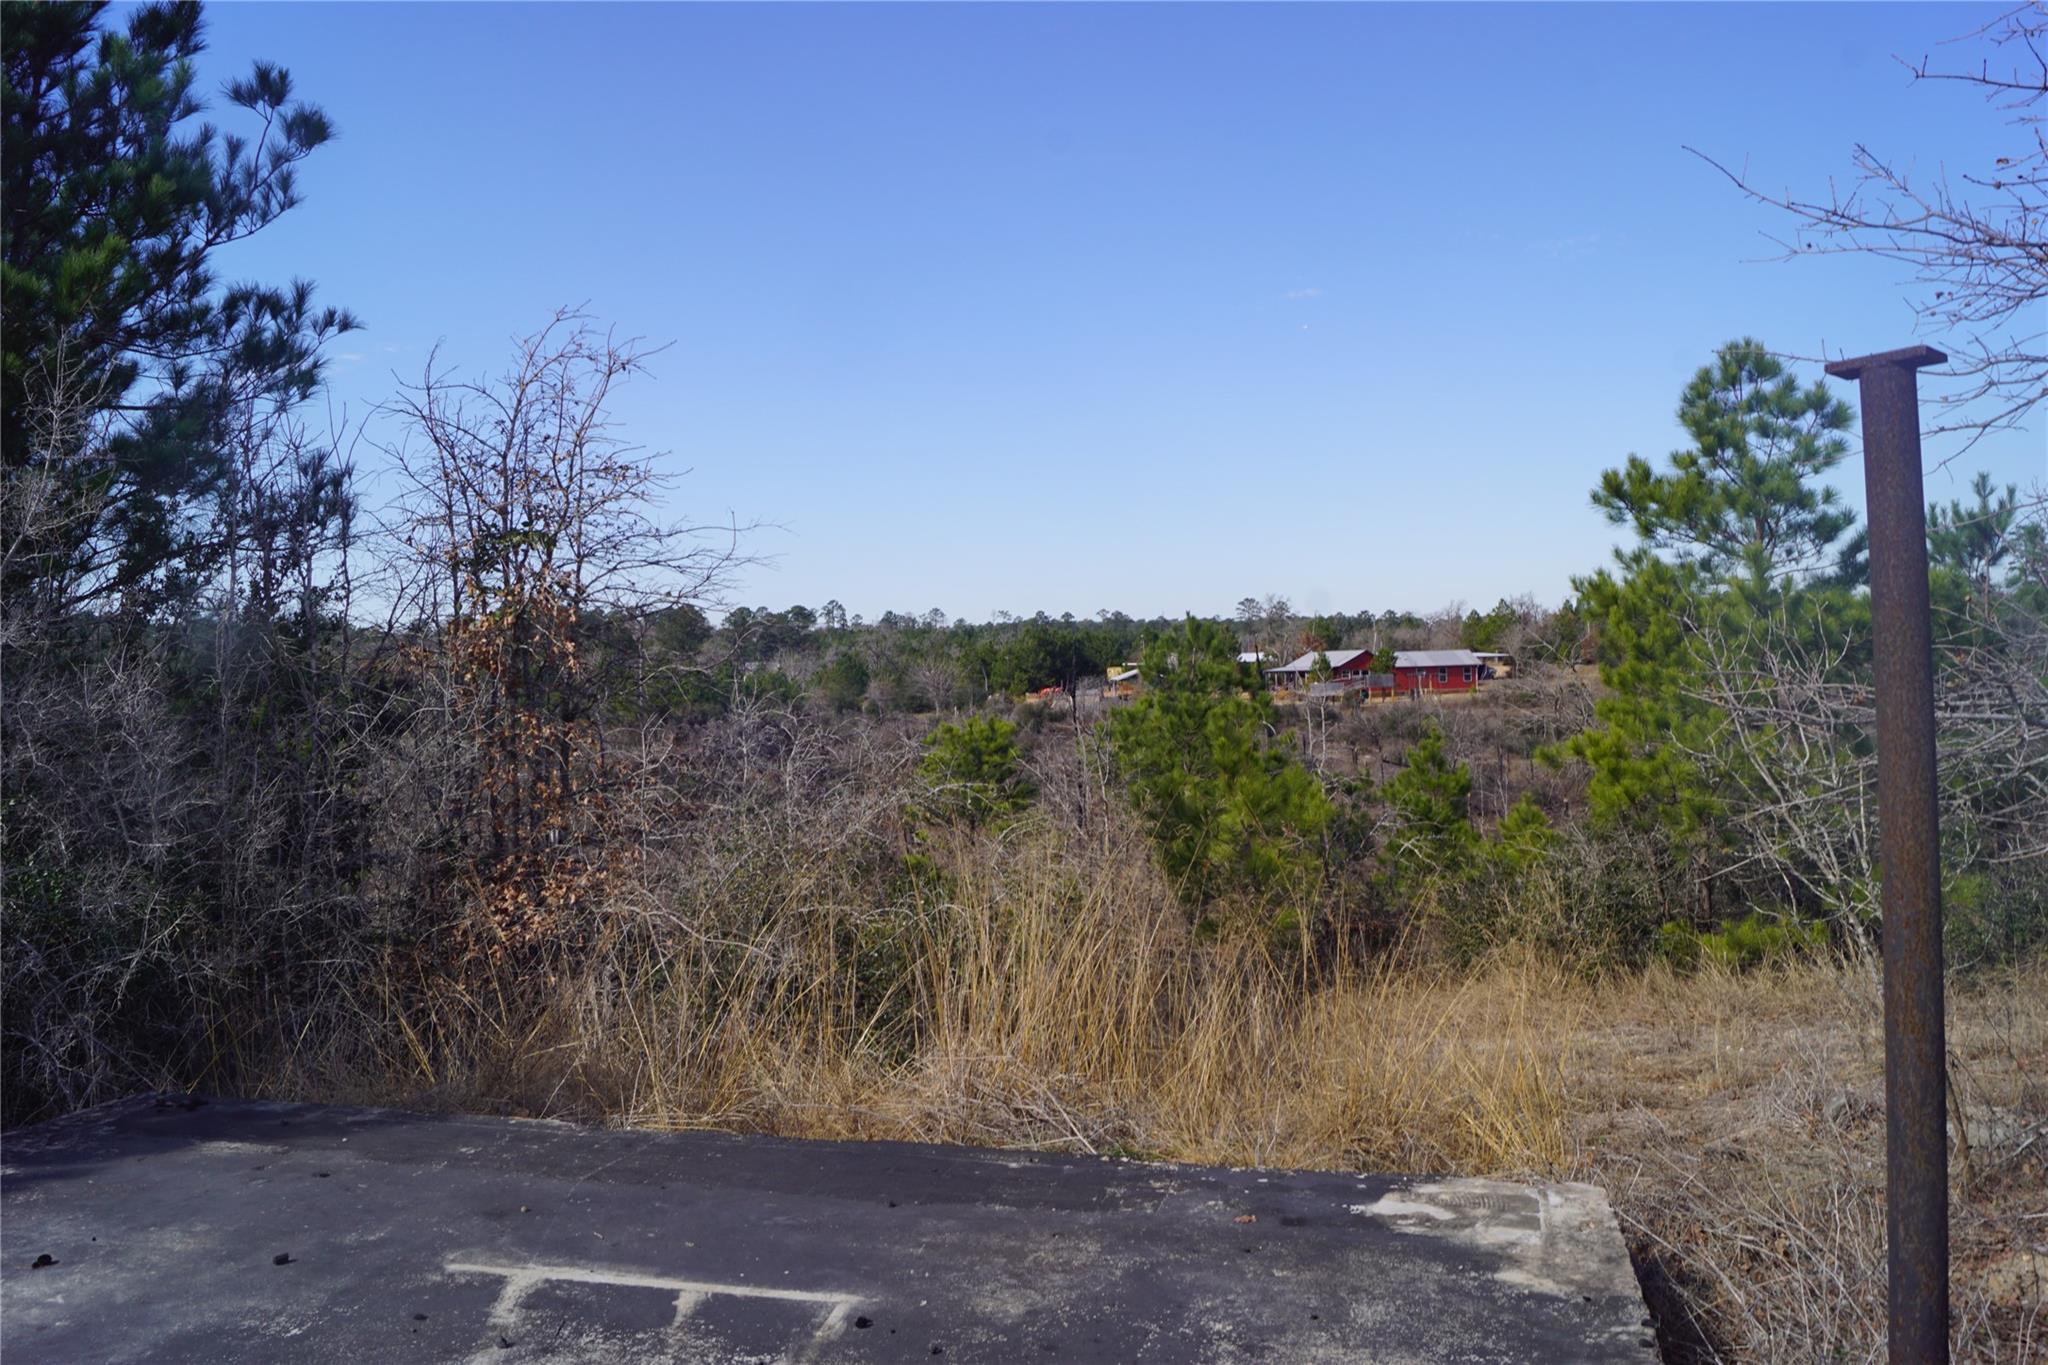 View Bastrop, TX 78602 land